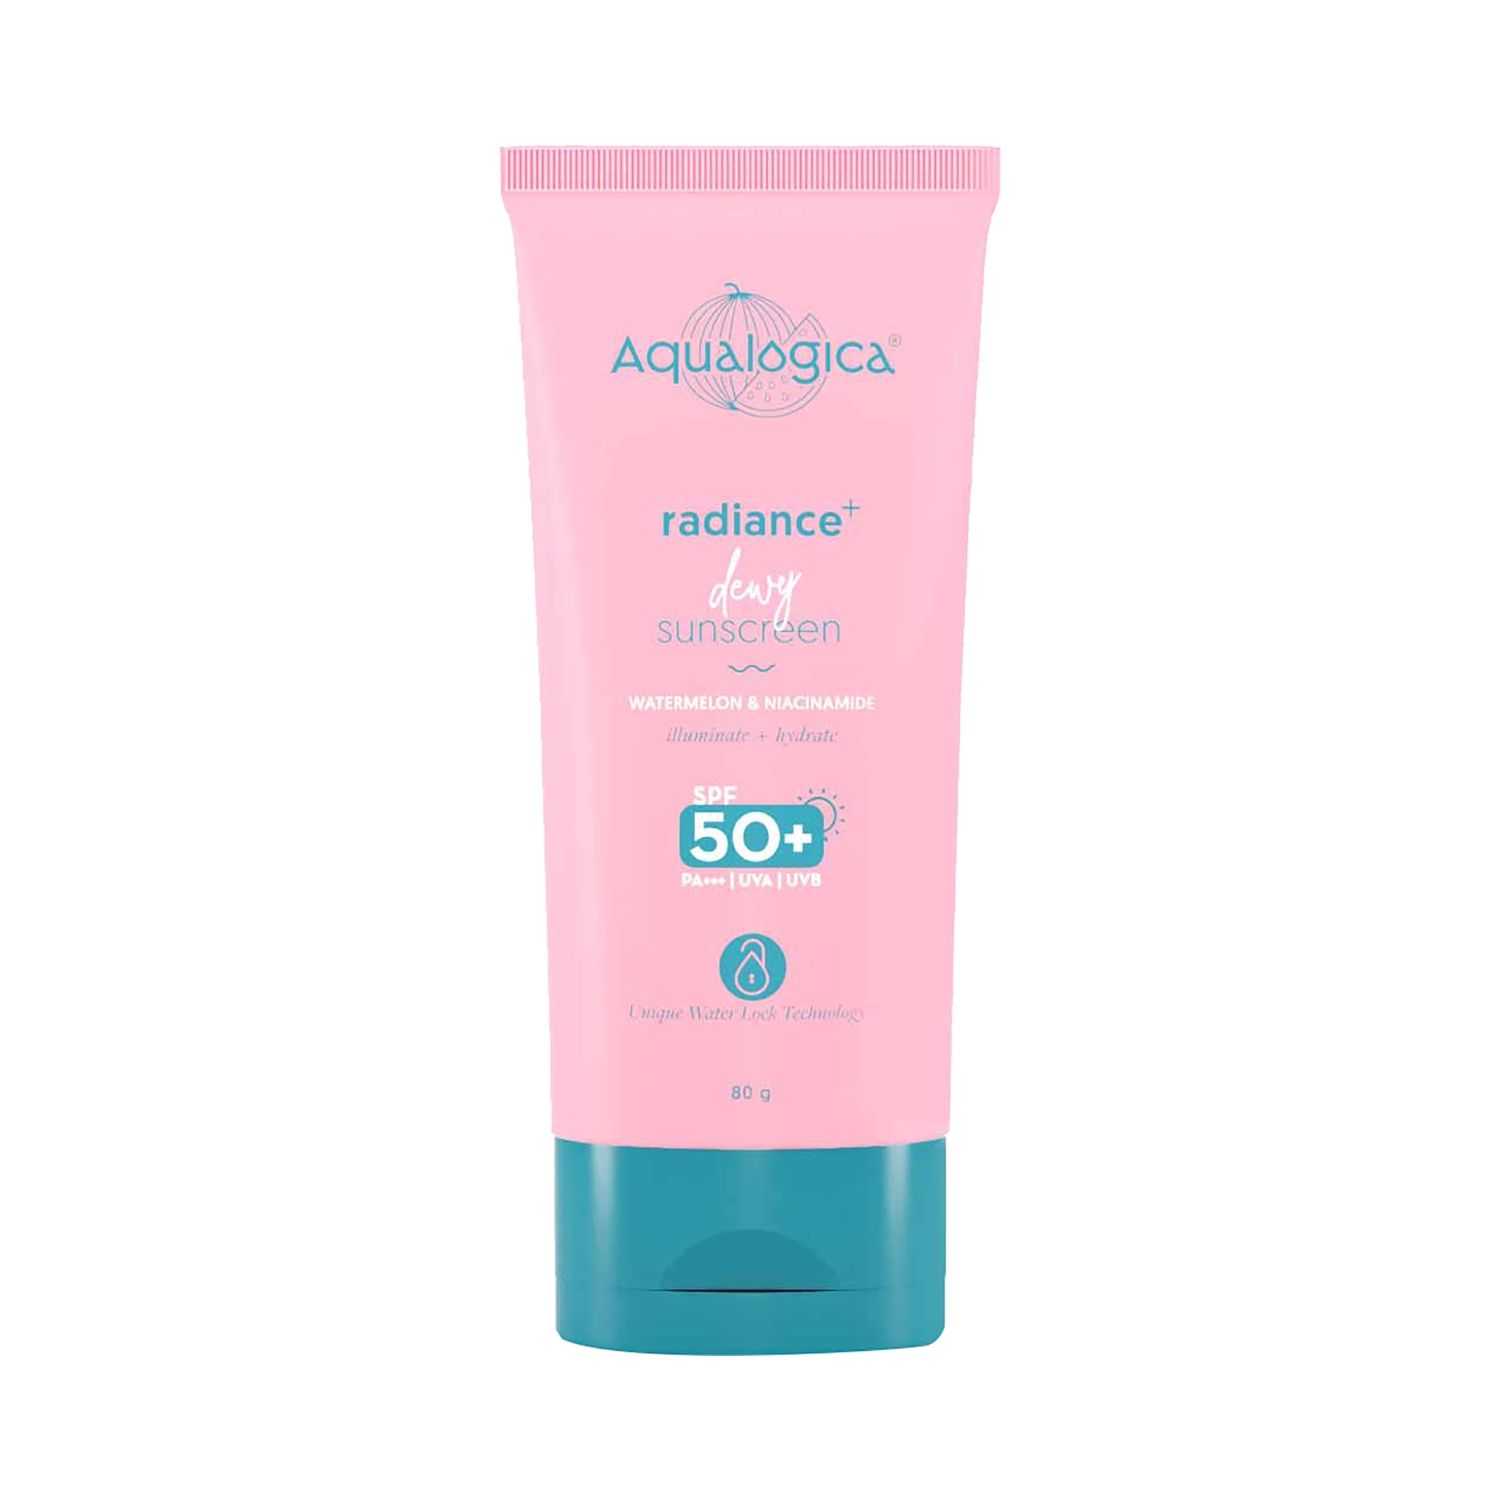 Aqualogica | Aqualogica Radiance+ Dewy Sunscreen SPF 50 PA+++ With Watermelon & Niacinamide (80g)